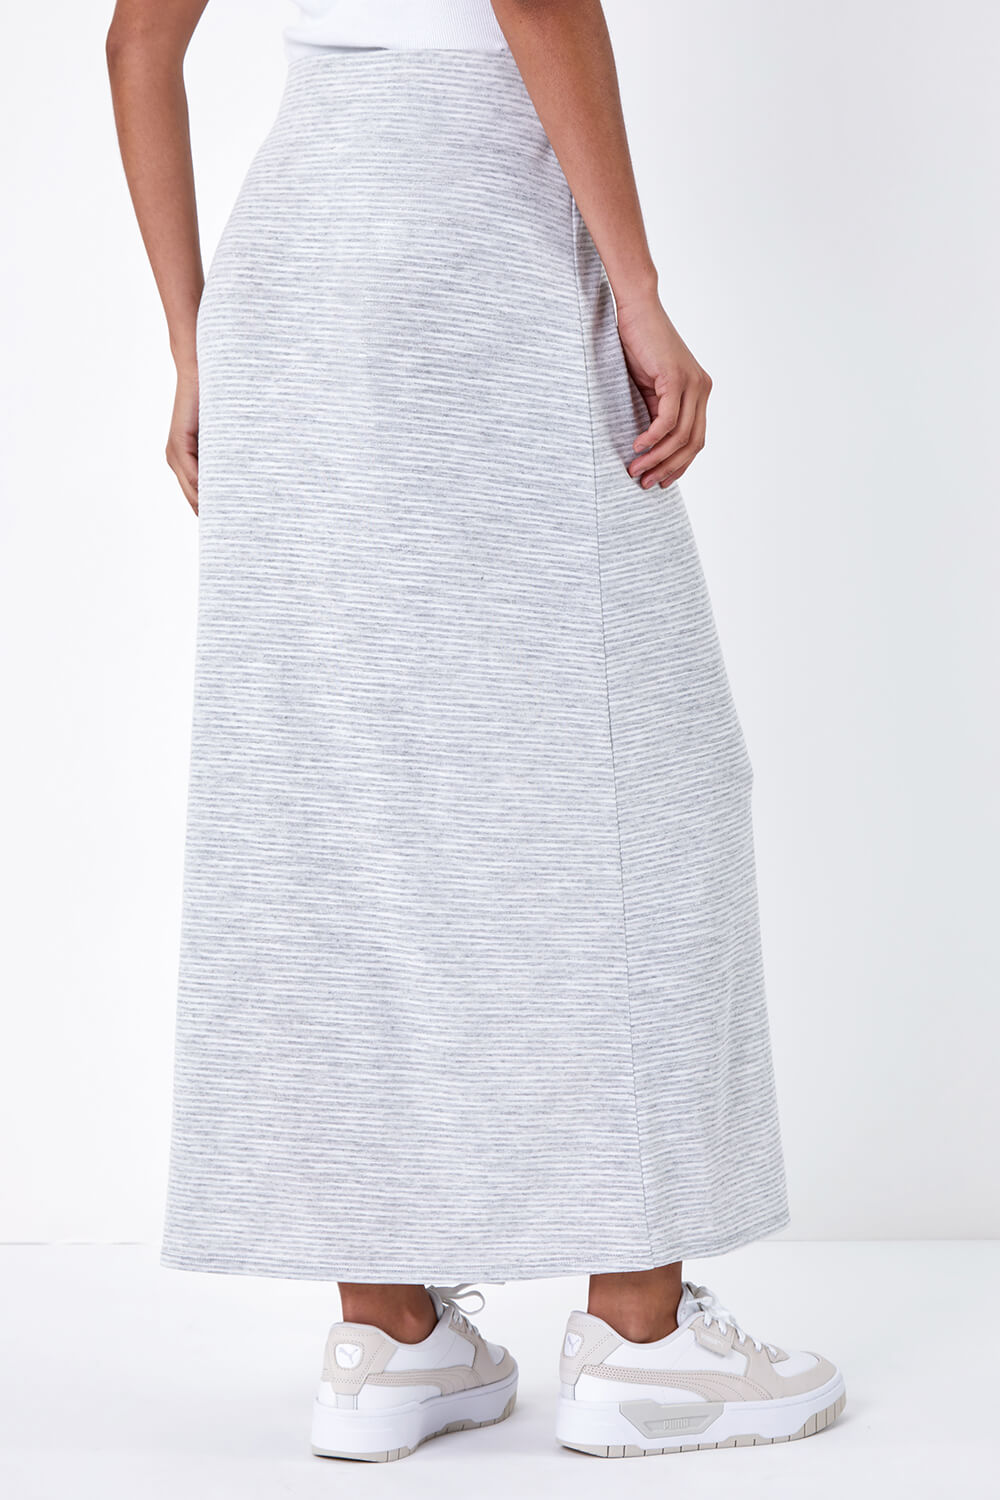 Grey Stripe Print Stretch Maxi Skirt, Image 3 of 5